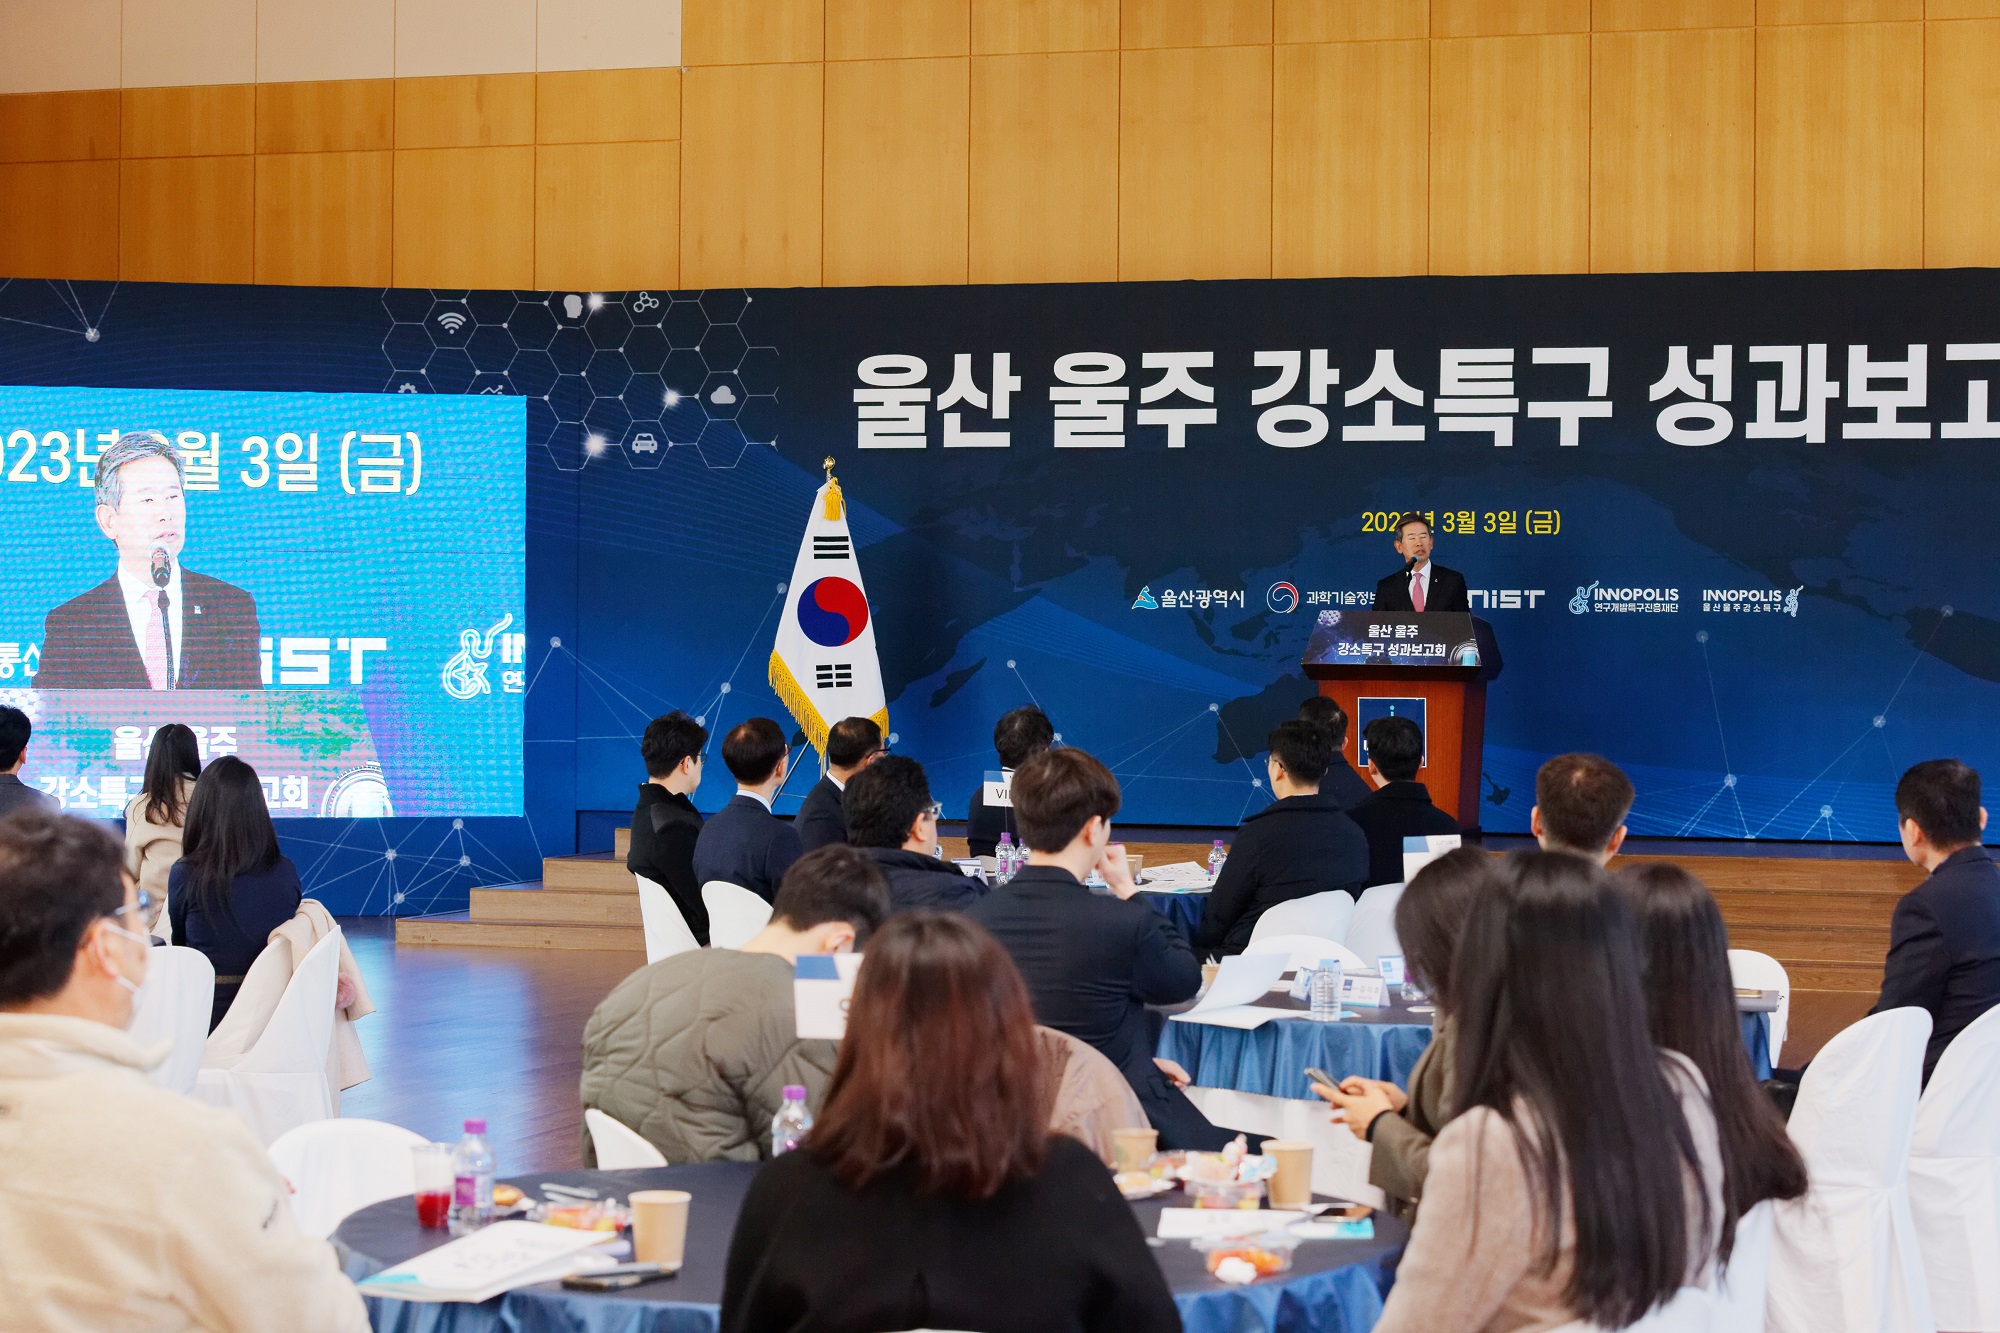 Deputy Mayor Hyo Dae Ahn for Economic Affairs of Ulsan is delivering a congratulatory remark at the Open Presentations on Achievements of Ulsan-Ulju INNOPOLIS.